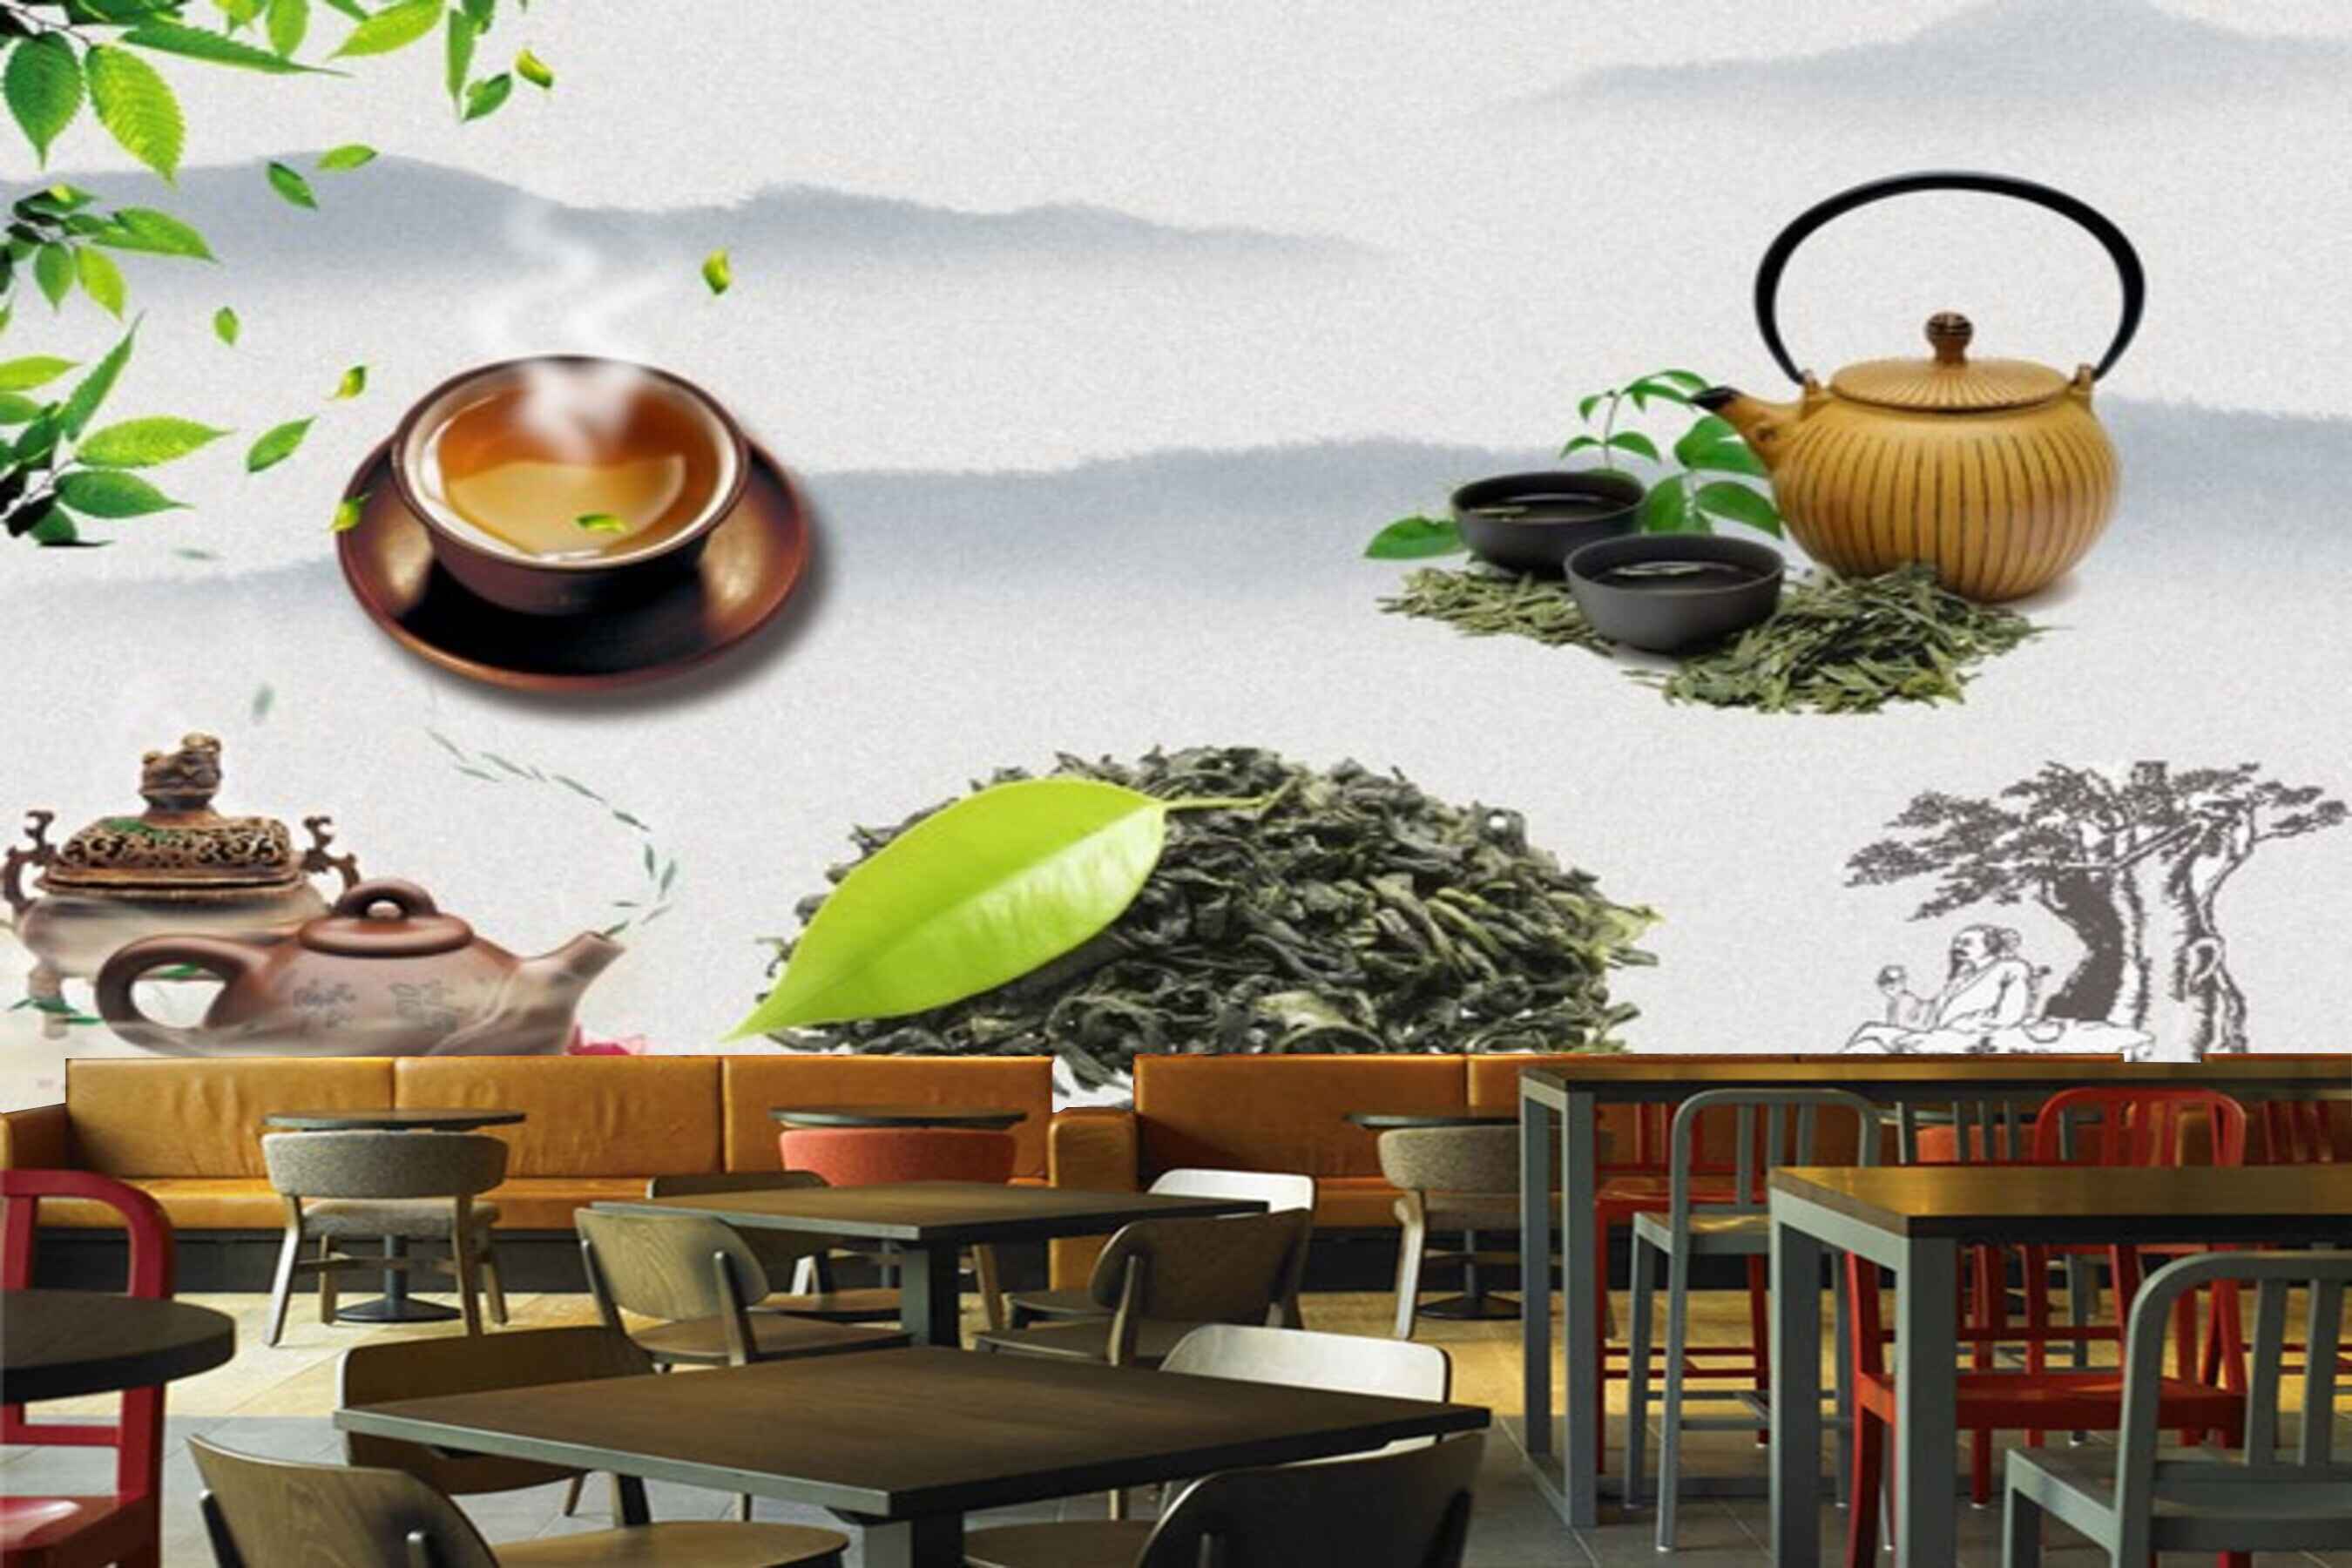 Avikalp MWZ3107 Coffeee Tea Leaves Mug Cups HD Wallpaper for Cafe Restaurant